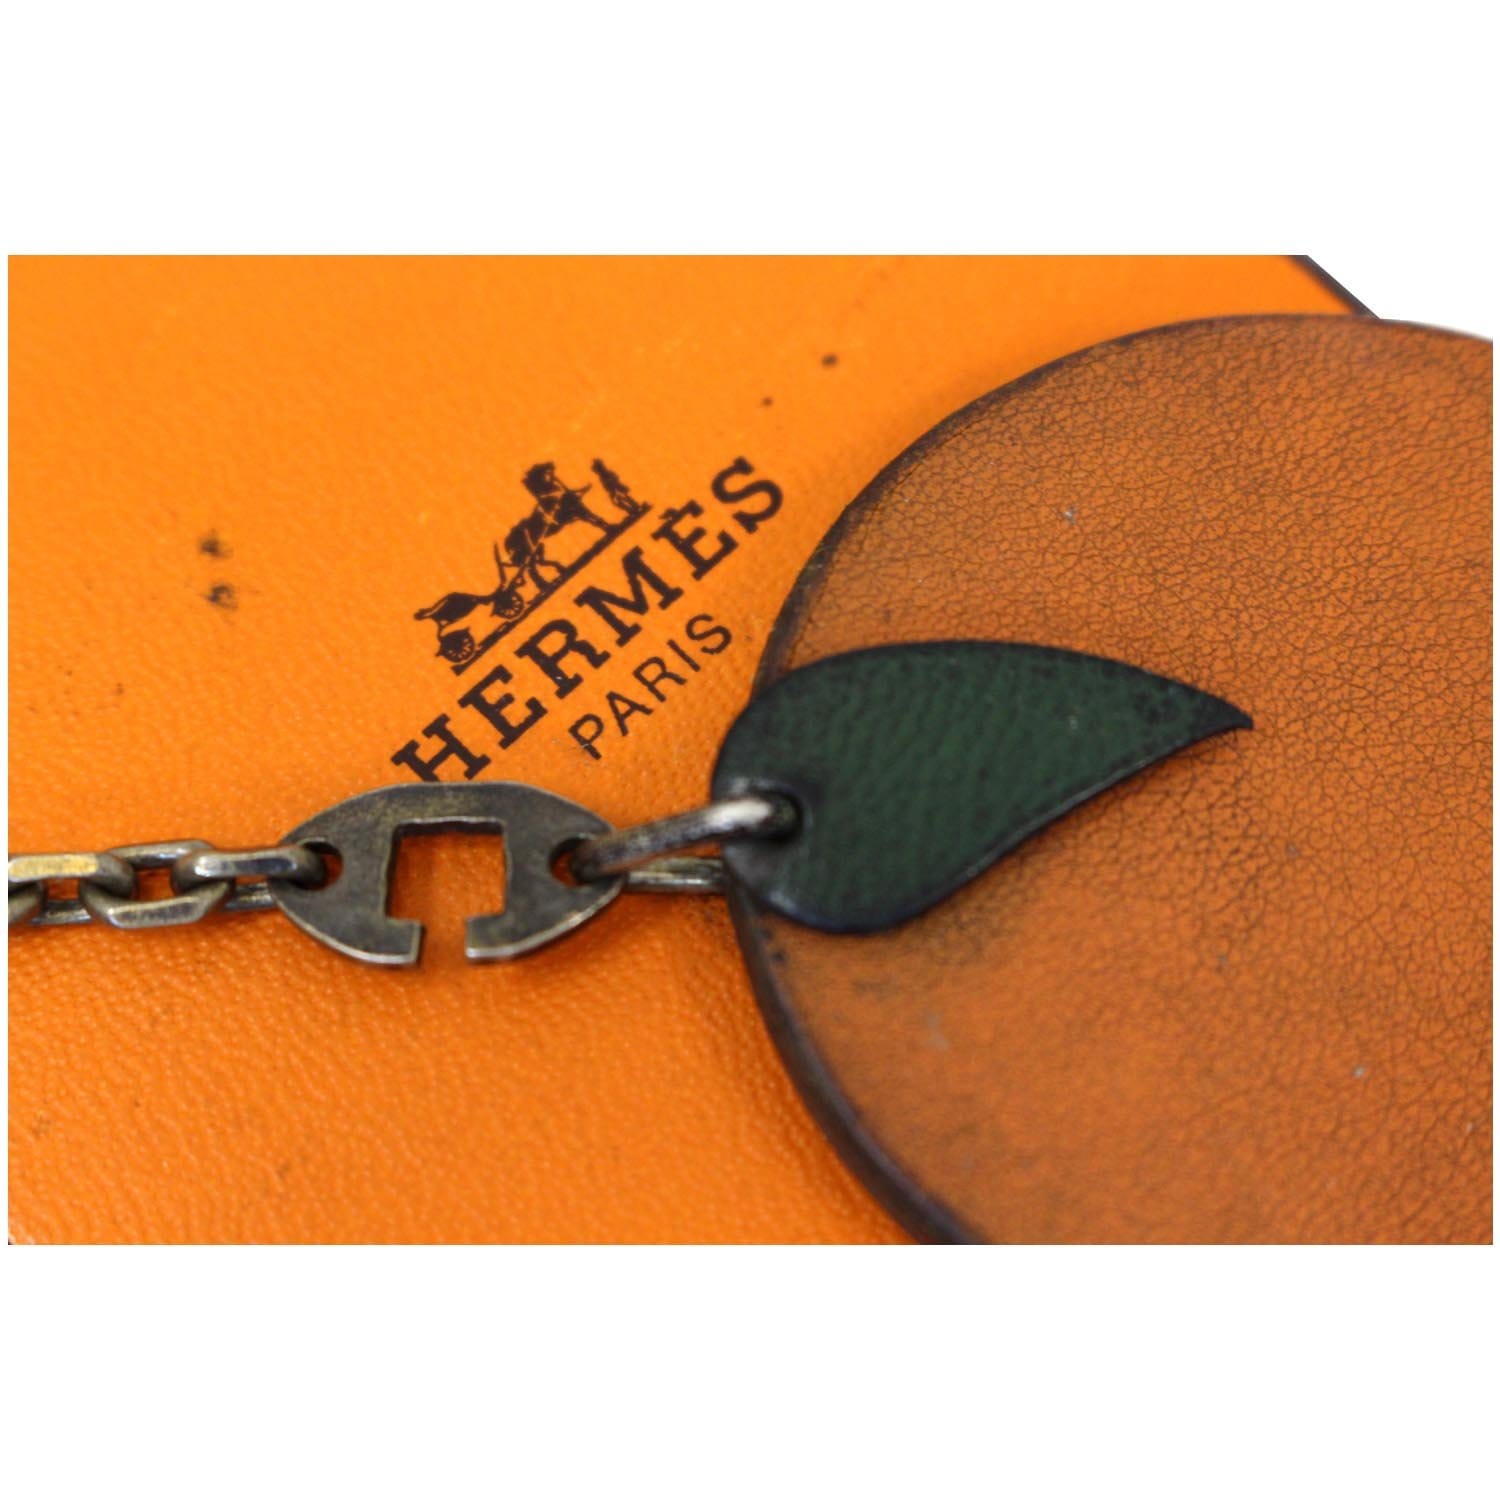 Hermès - Orange Bag Charm